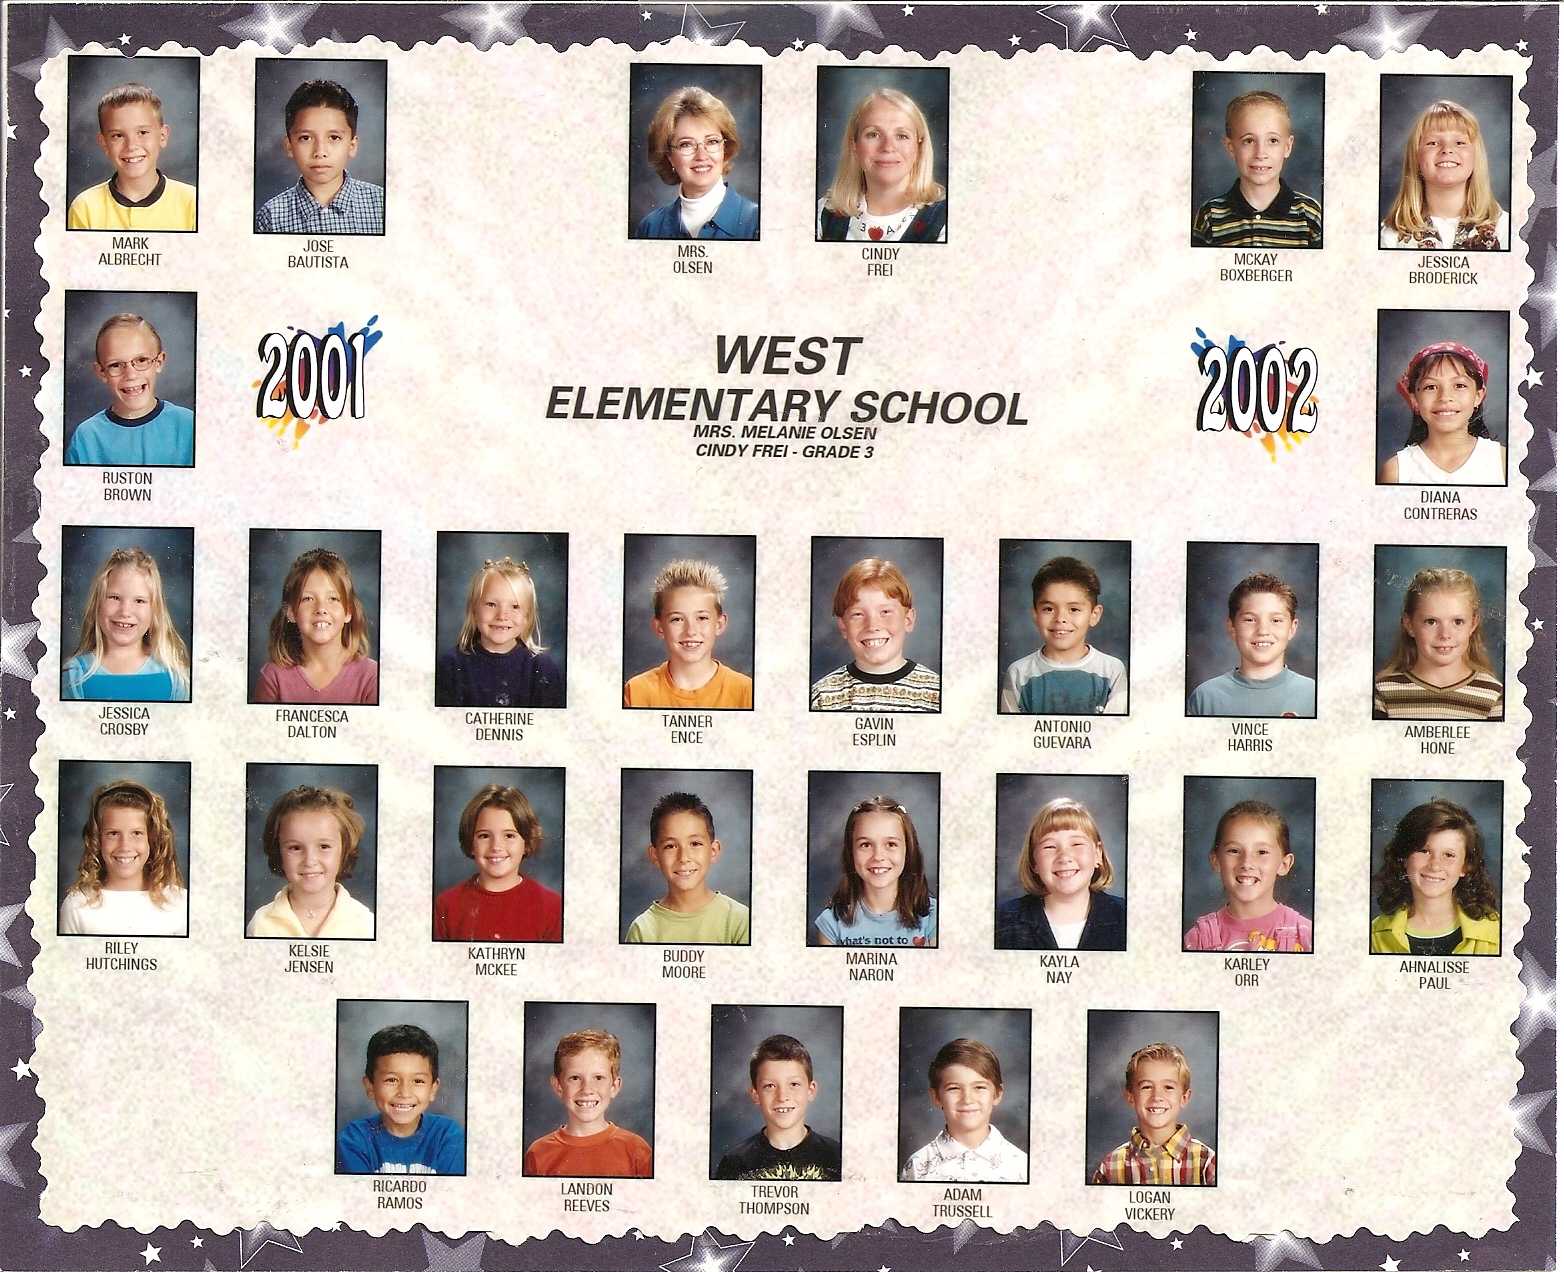 Miss Cindy Frei's 2001-2002 third grade class at West Elementary School